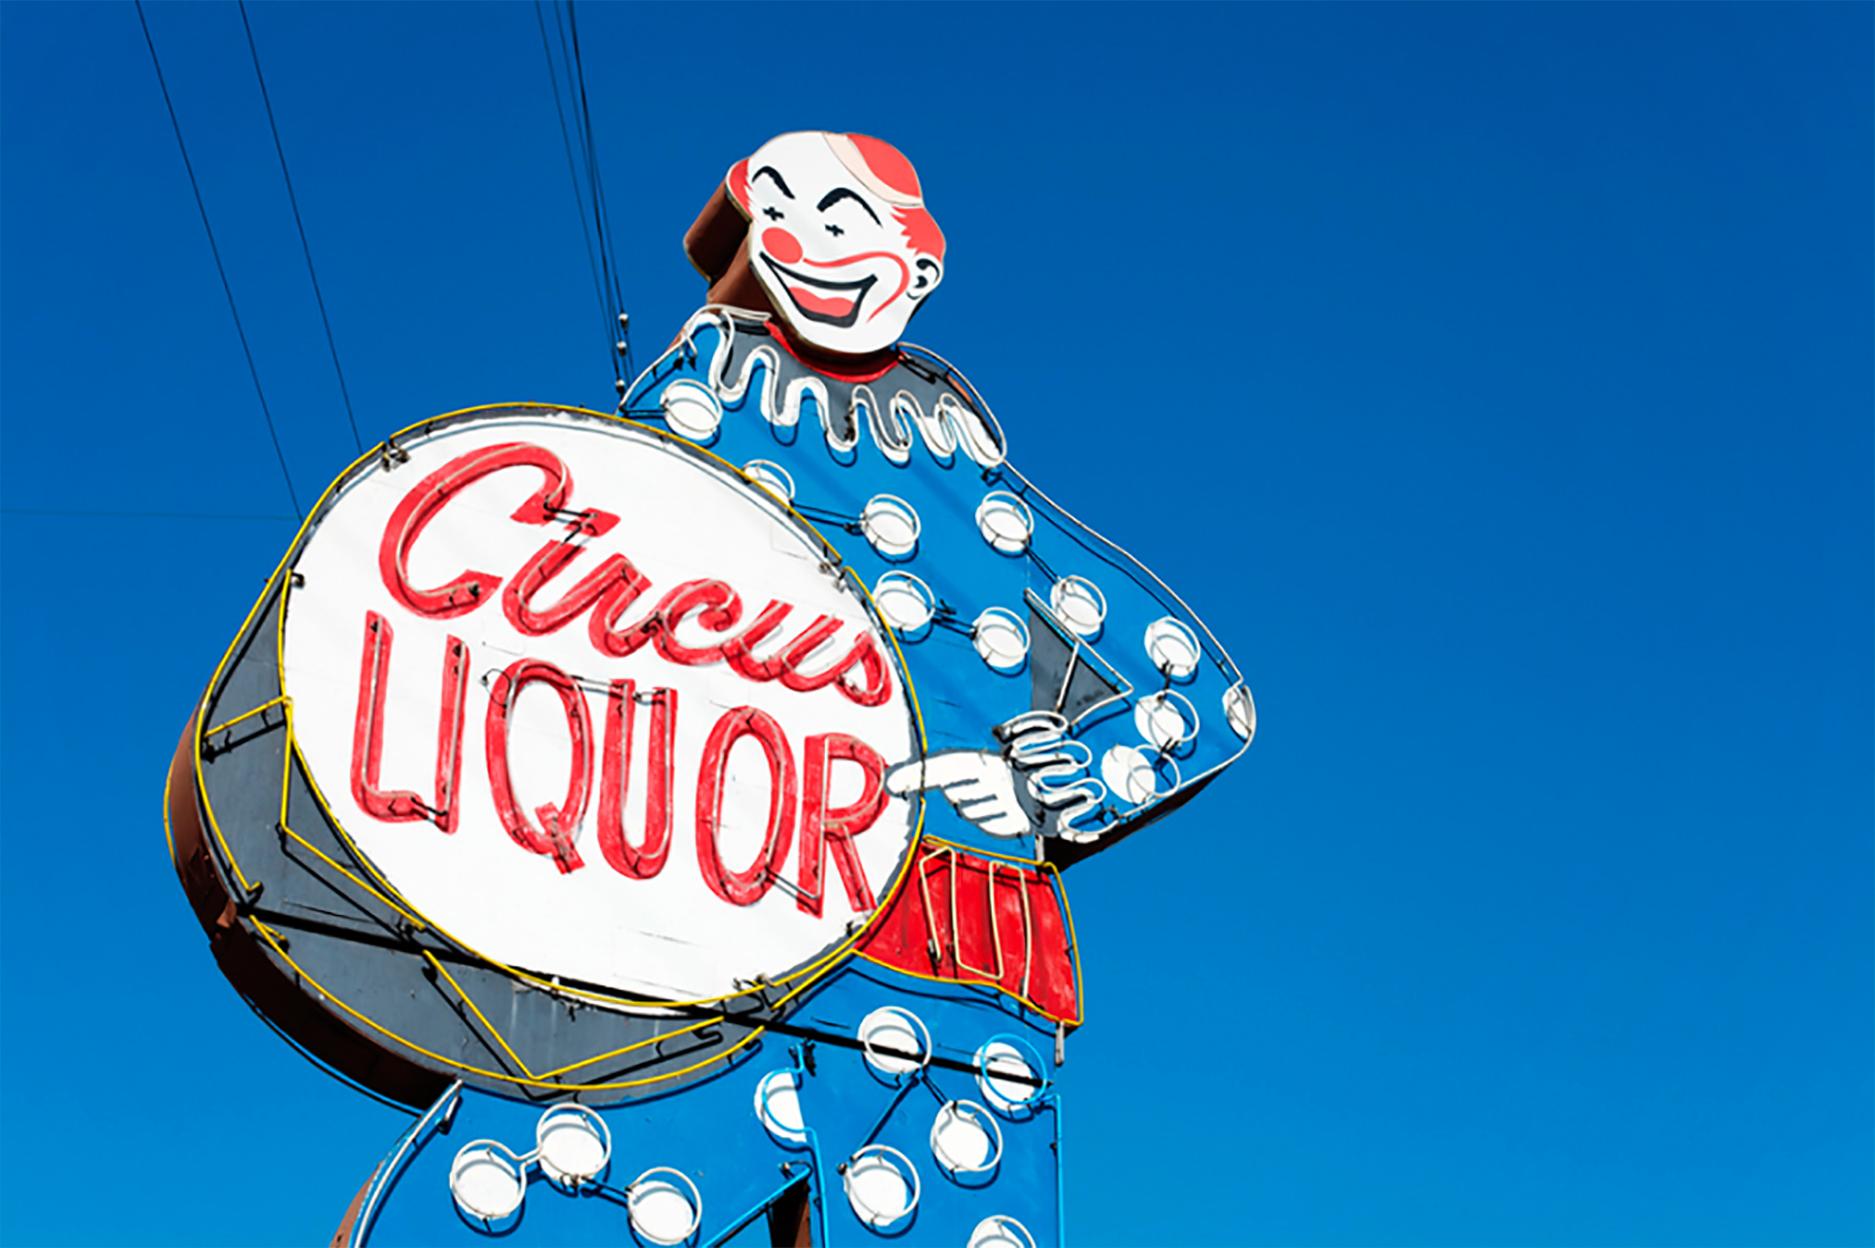 "Circus Liquor"  Type C Metallic Print  - Photograph by Jen Zahigian